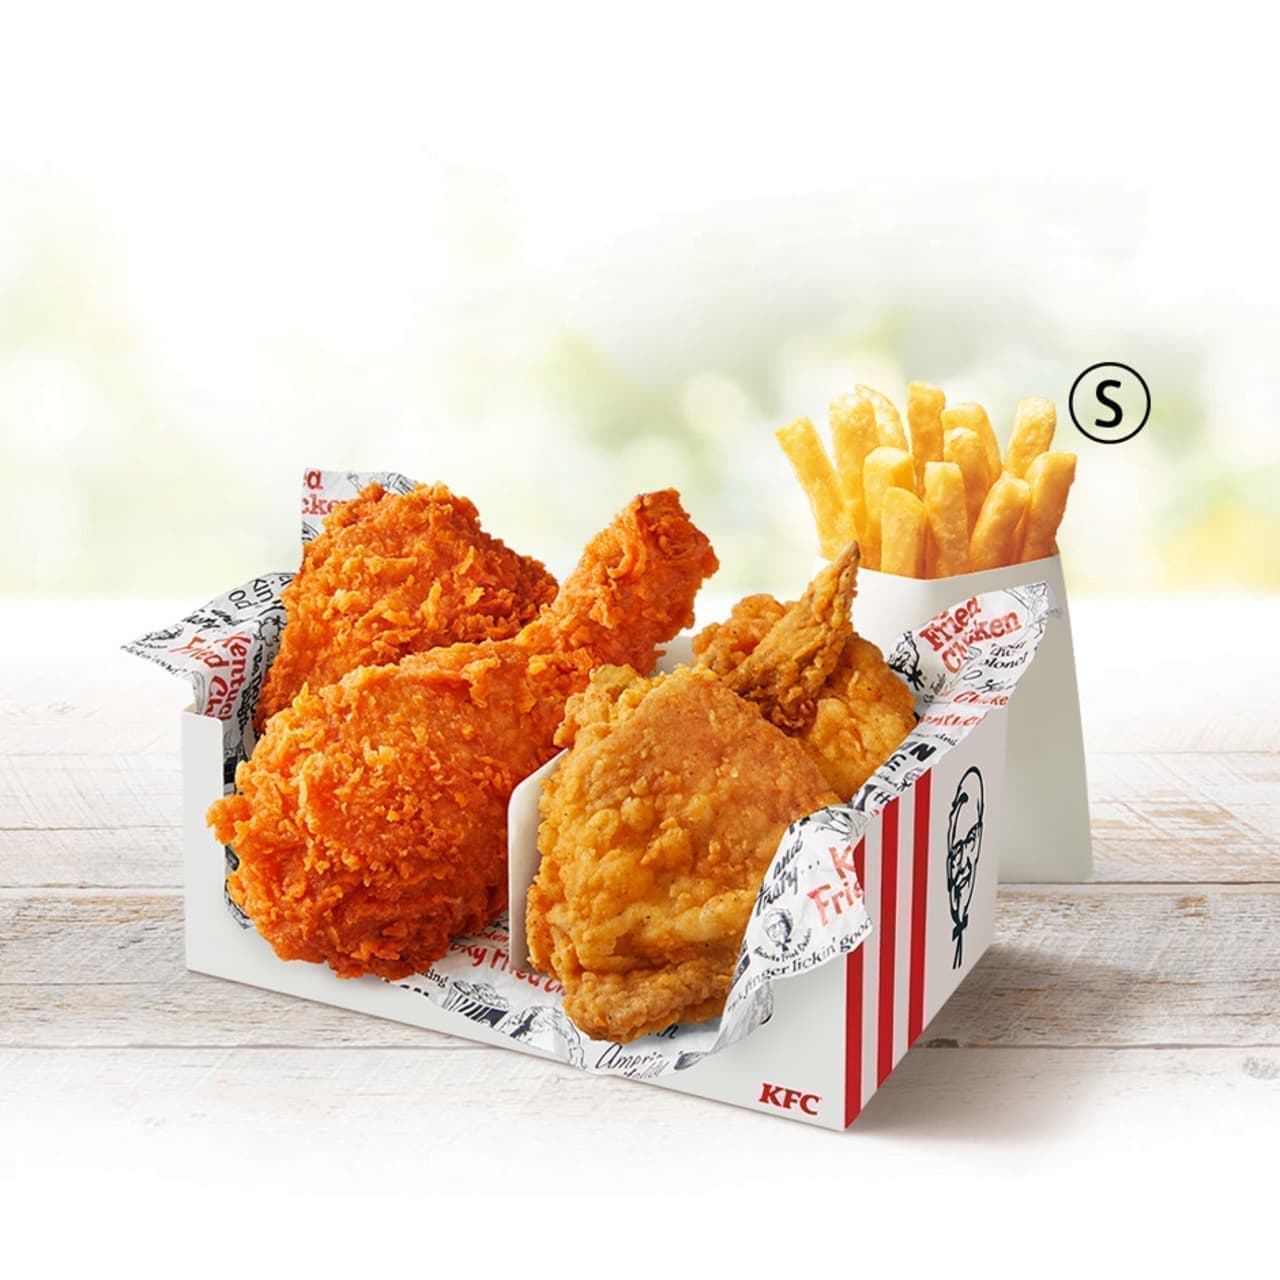 KFC "Eating Comparison 4 Piece Pack